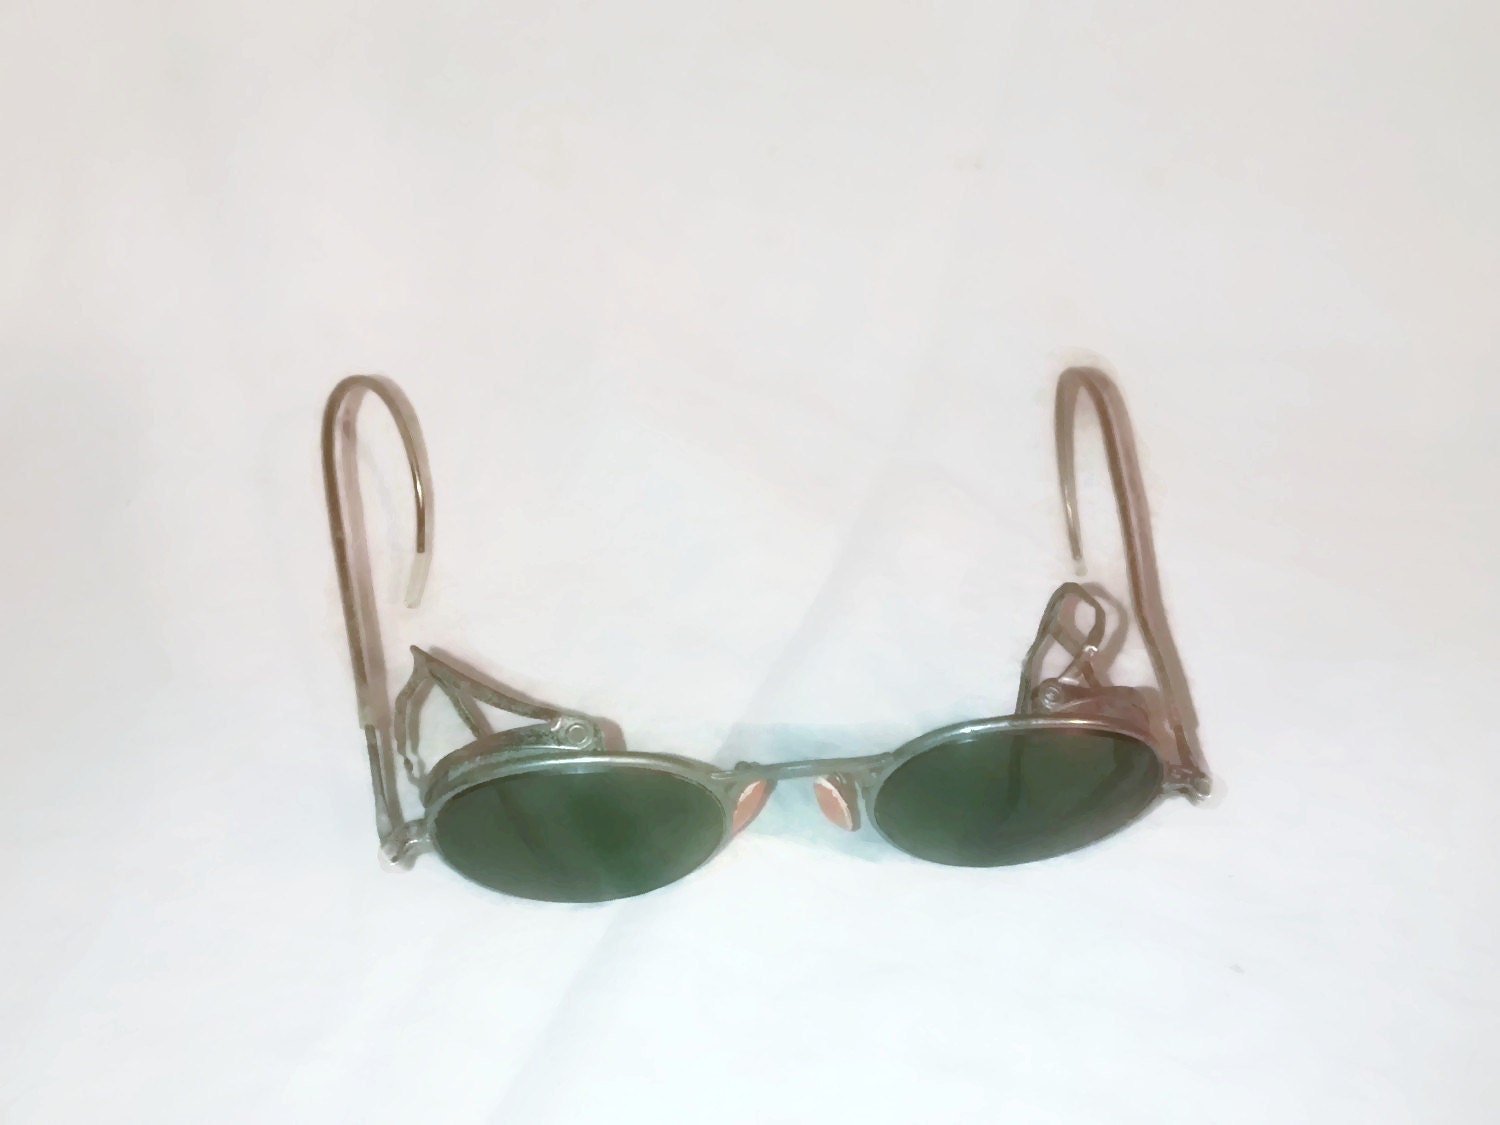 Antique Sunglasses Steam Punk Eyewear Vintage By Thelongacreflea 